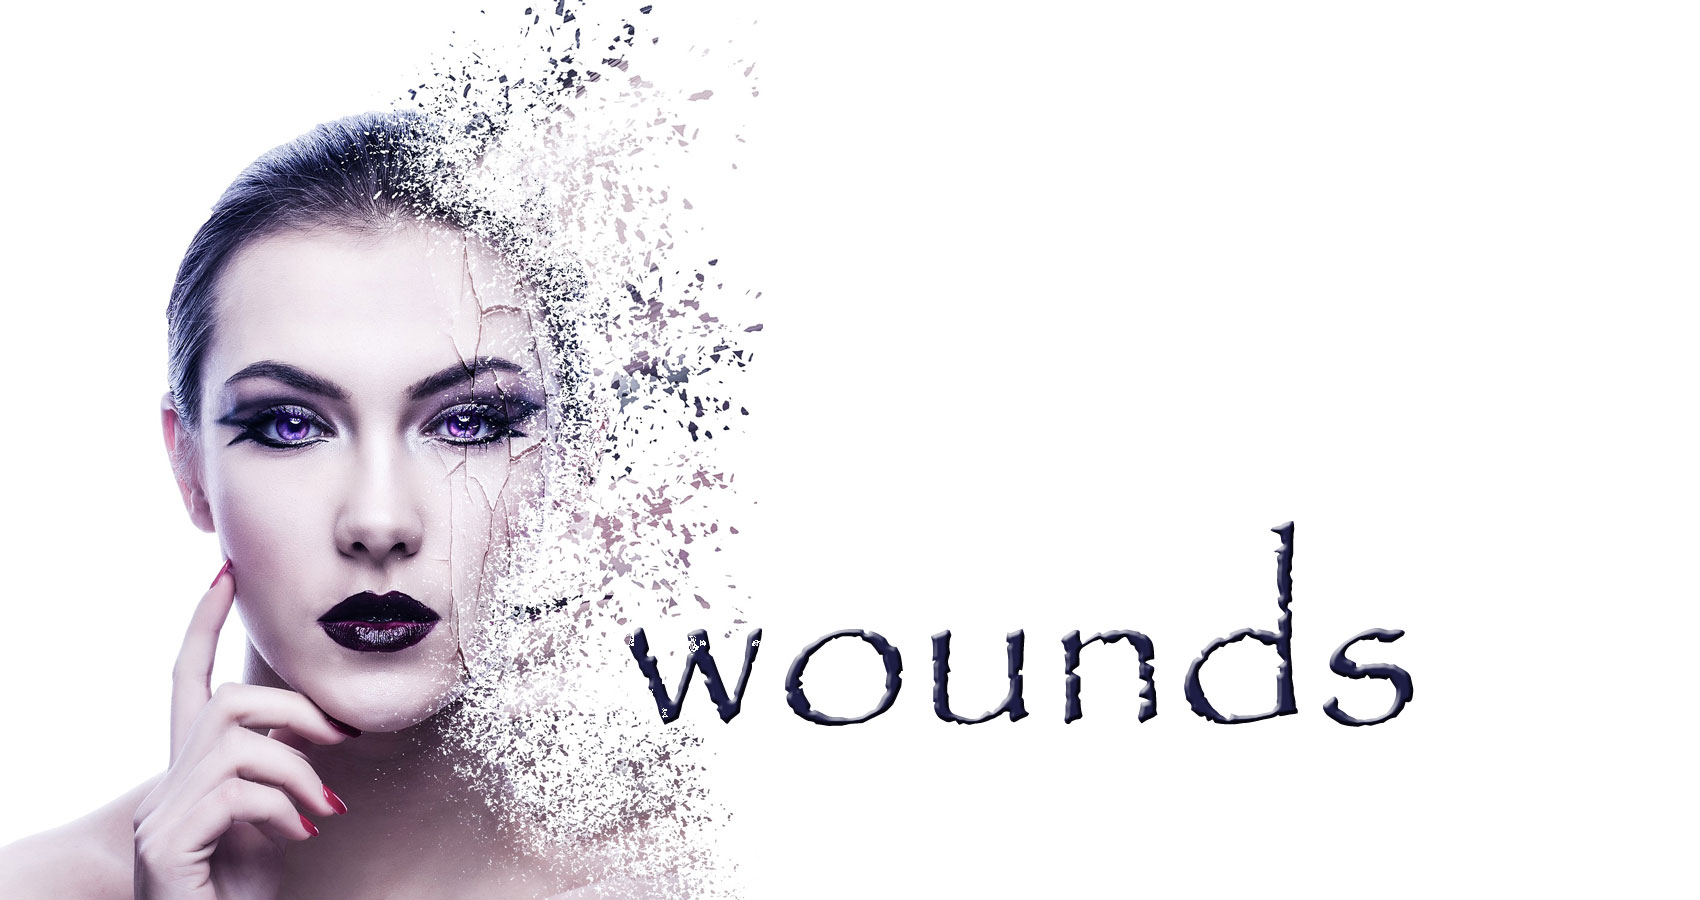 Wounds written by Jenn Hope at Spillwords.com